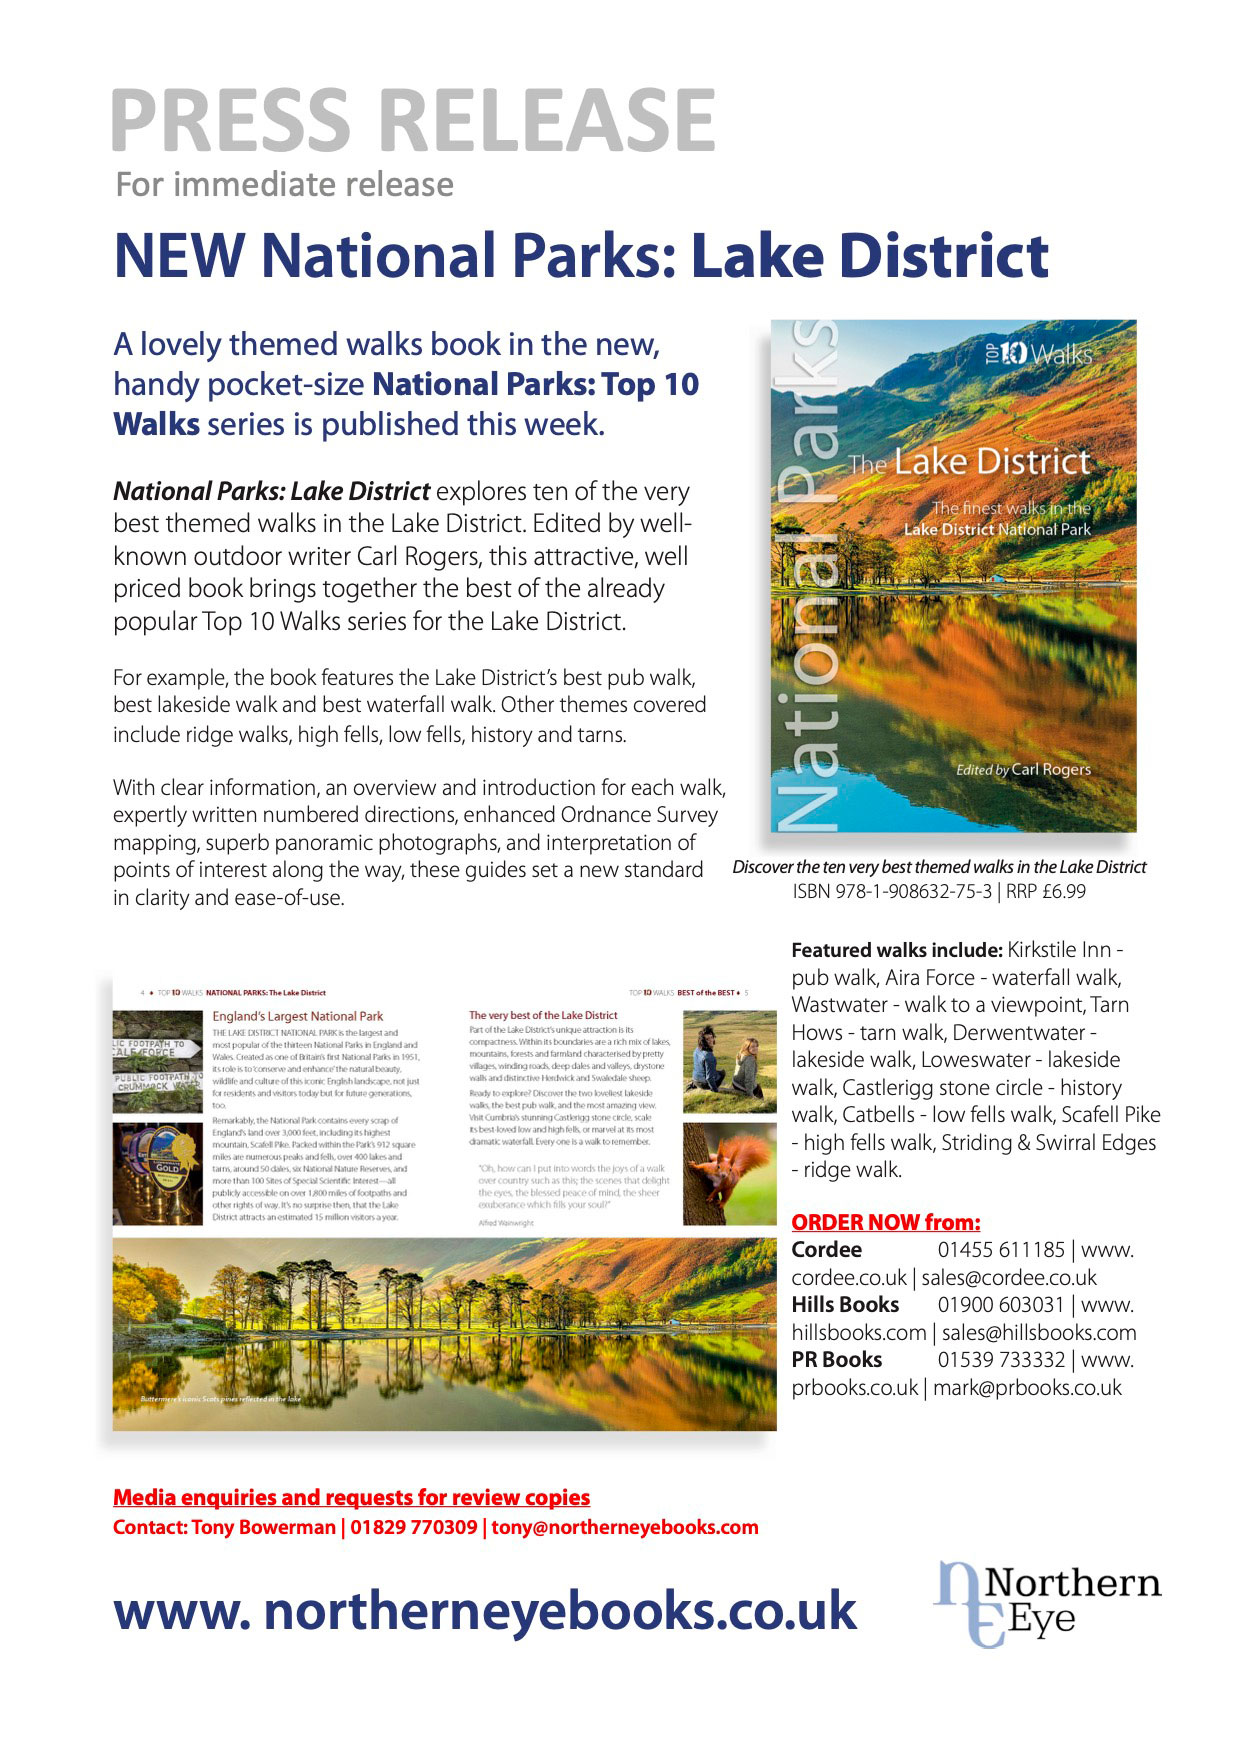 Northern Eye Books - Top 10 Walks: National Parks: Lake District